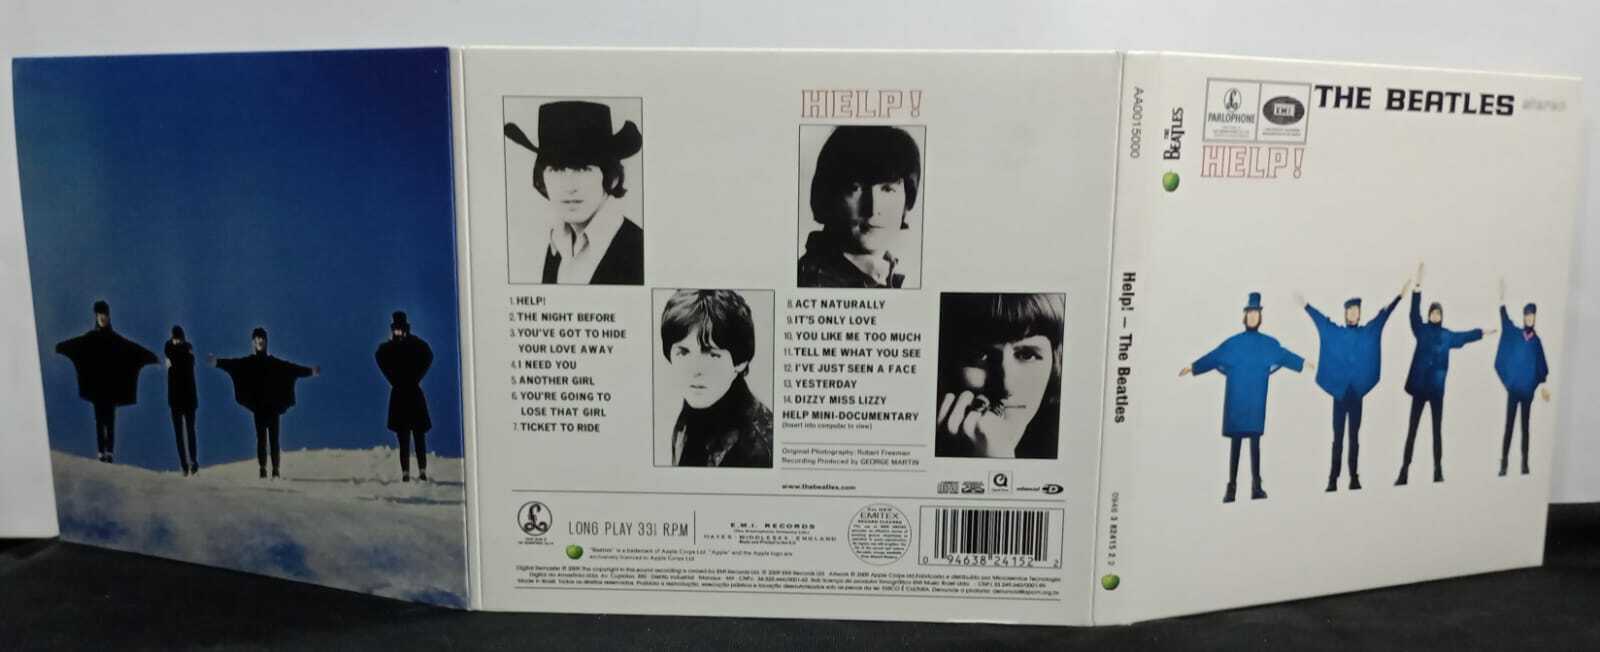 CD - Beatles the - Help